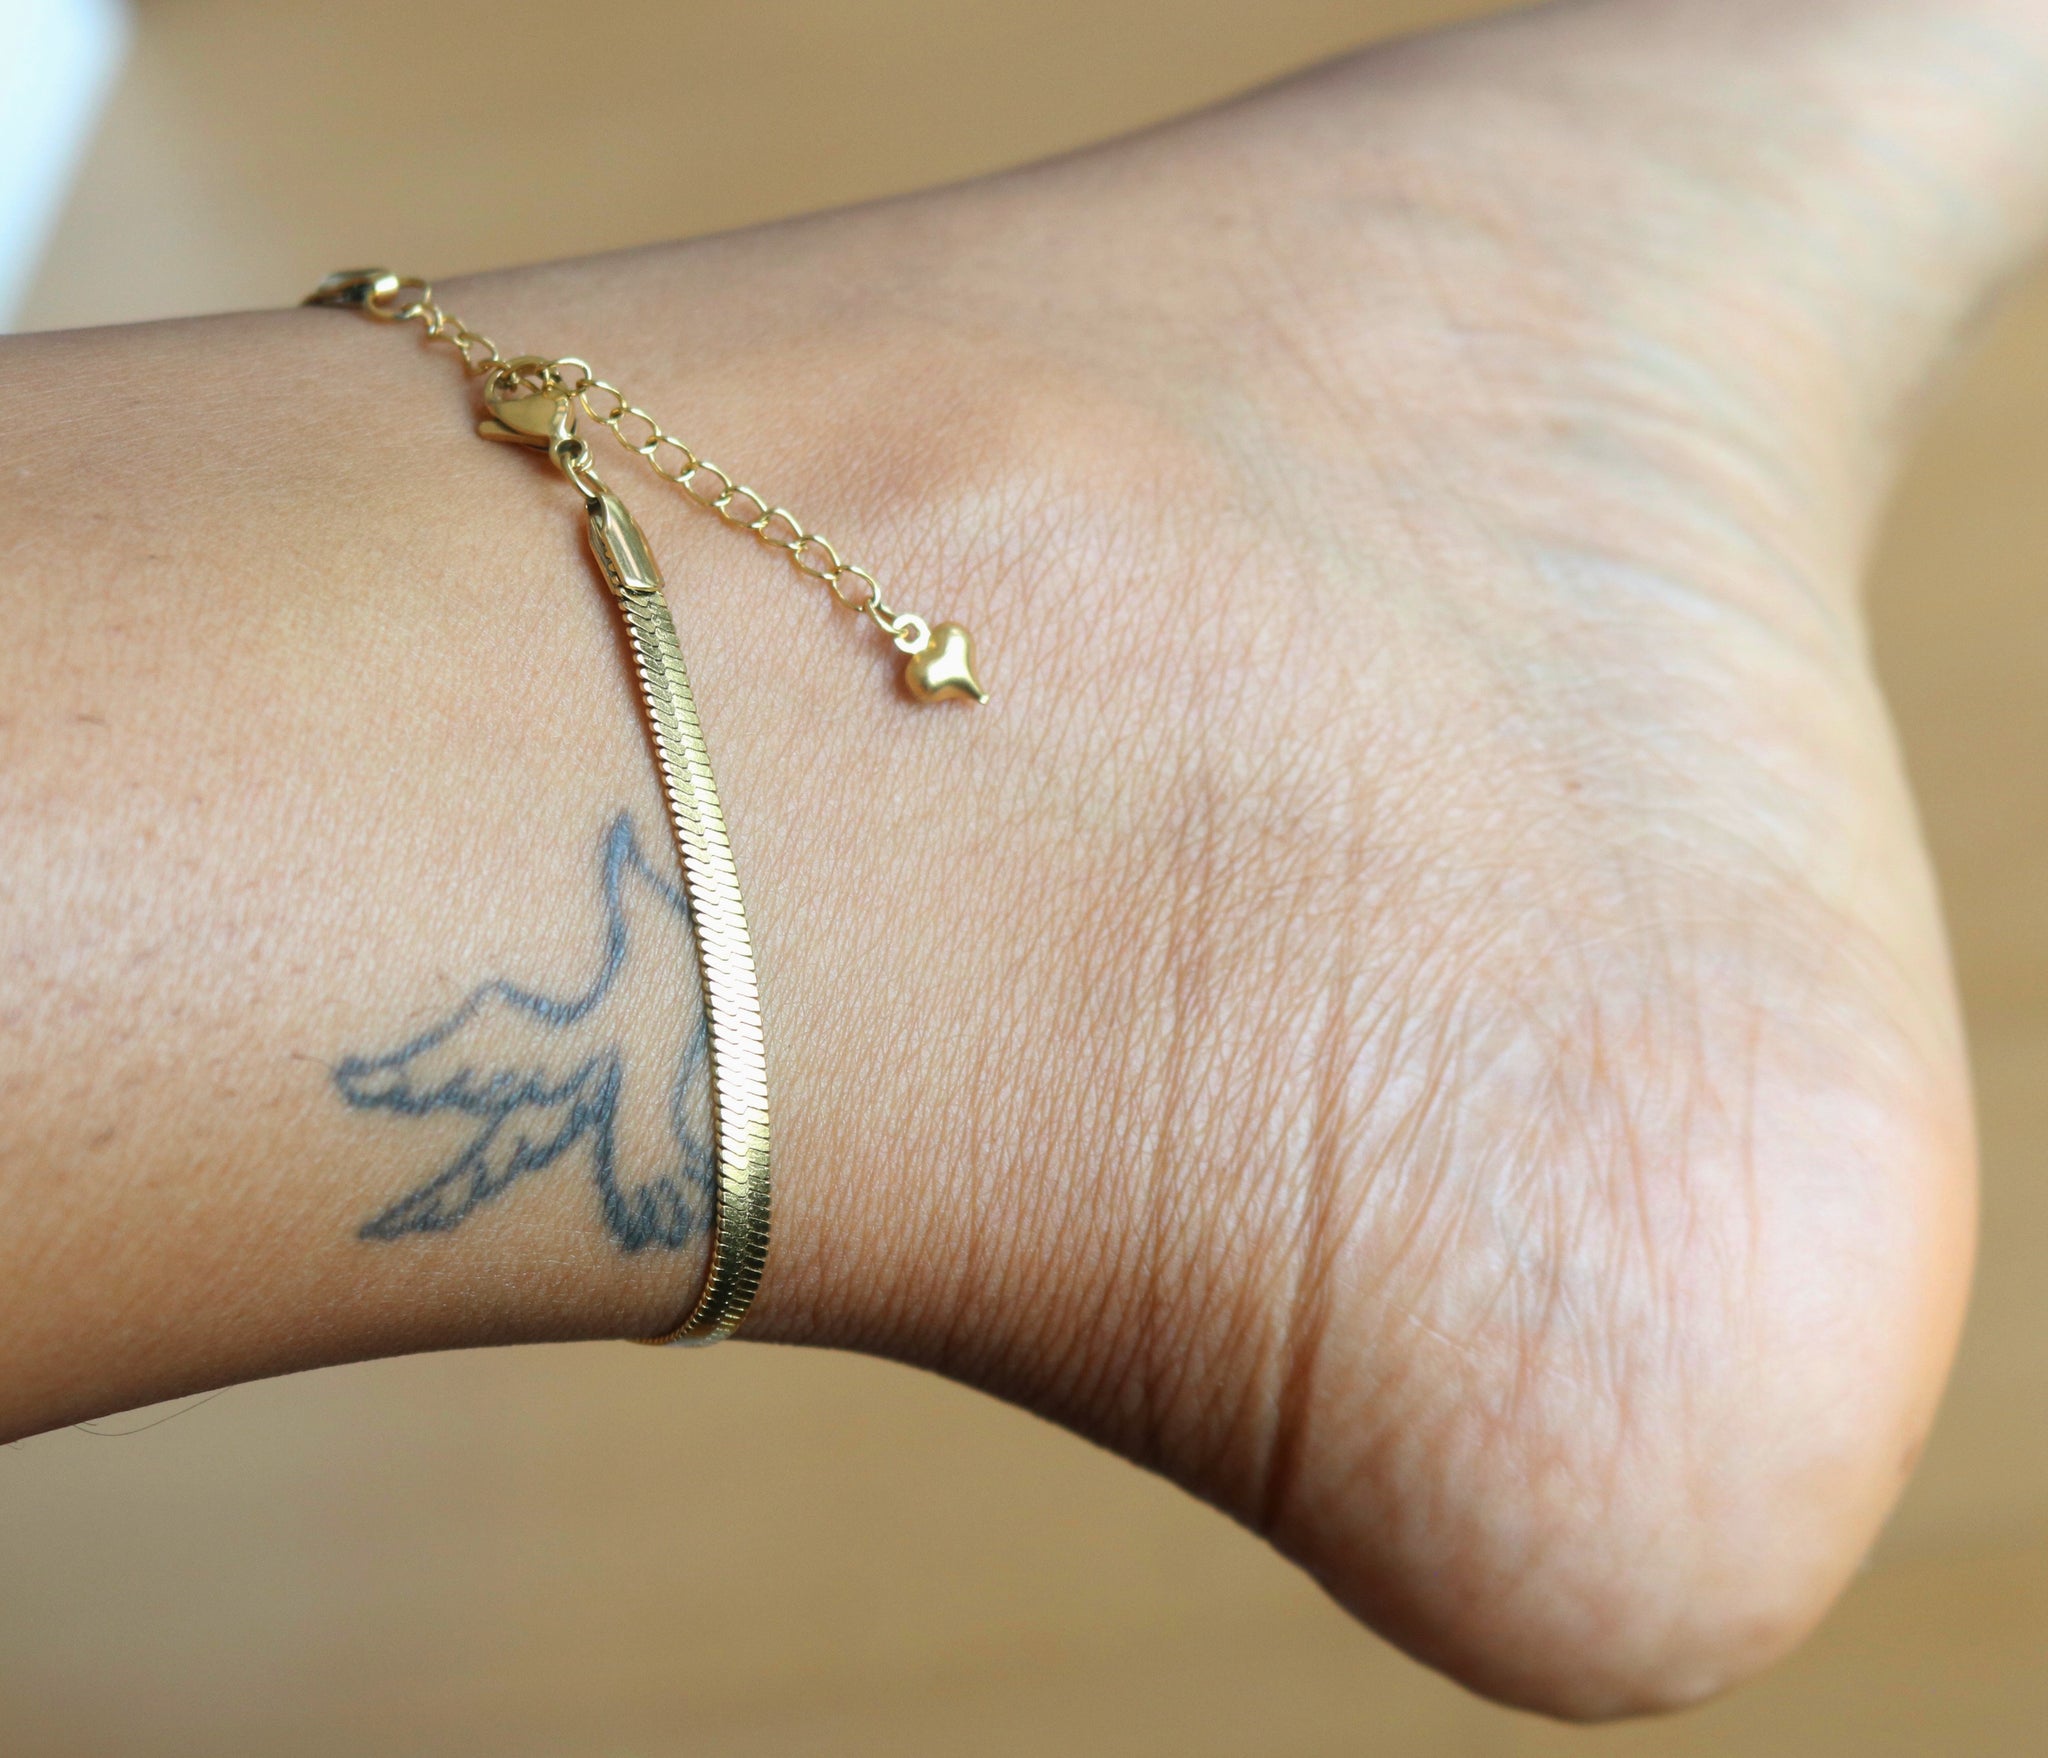 Pin by Gab's Jram on gf | Ankle bracelet tattoo, Tattoo bracelet, Feather  tattoos